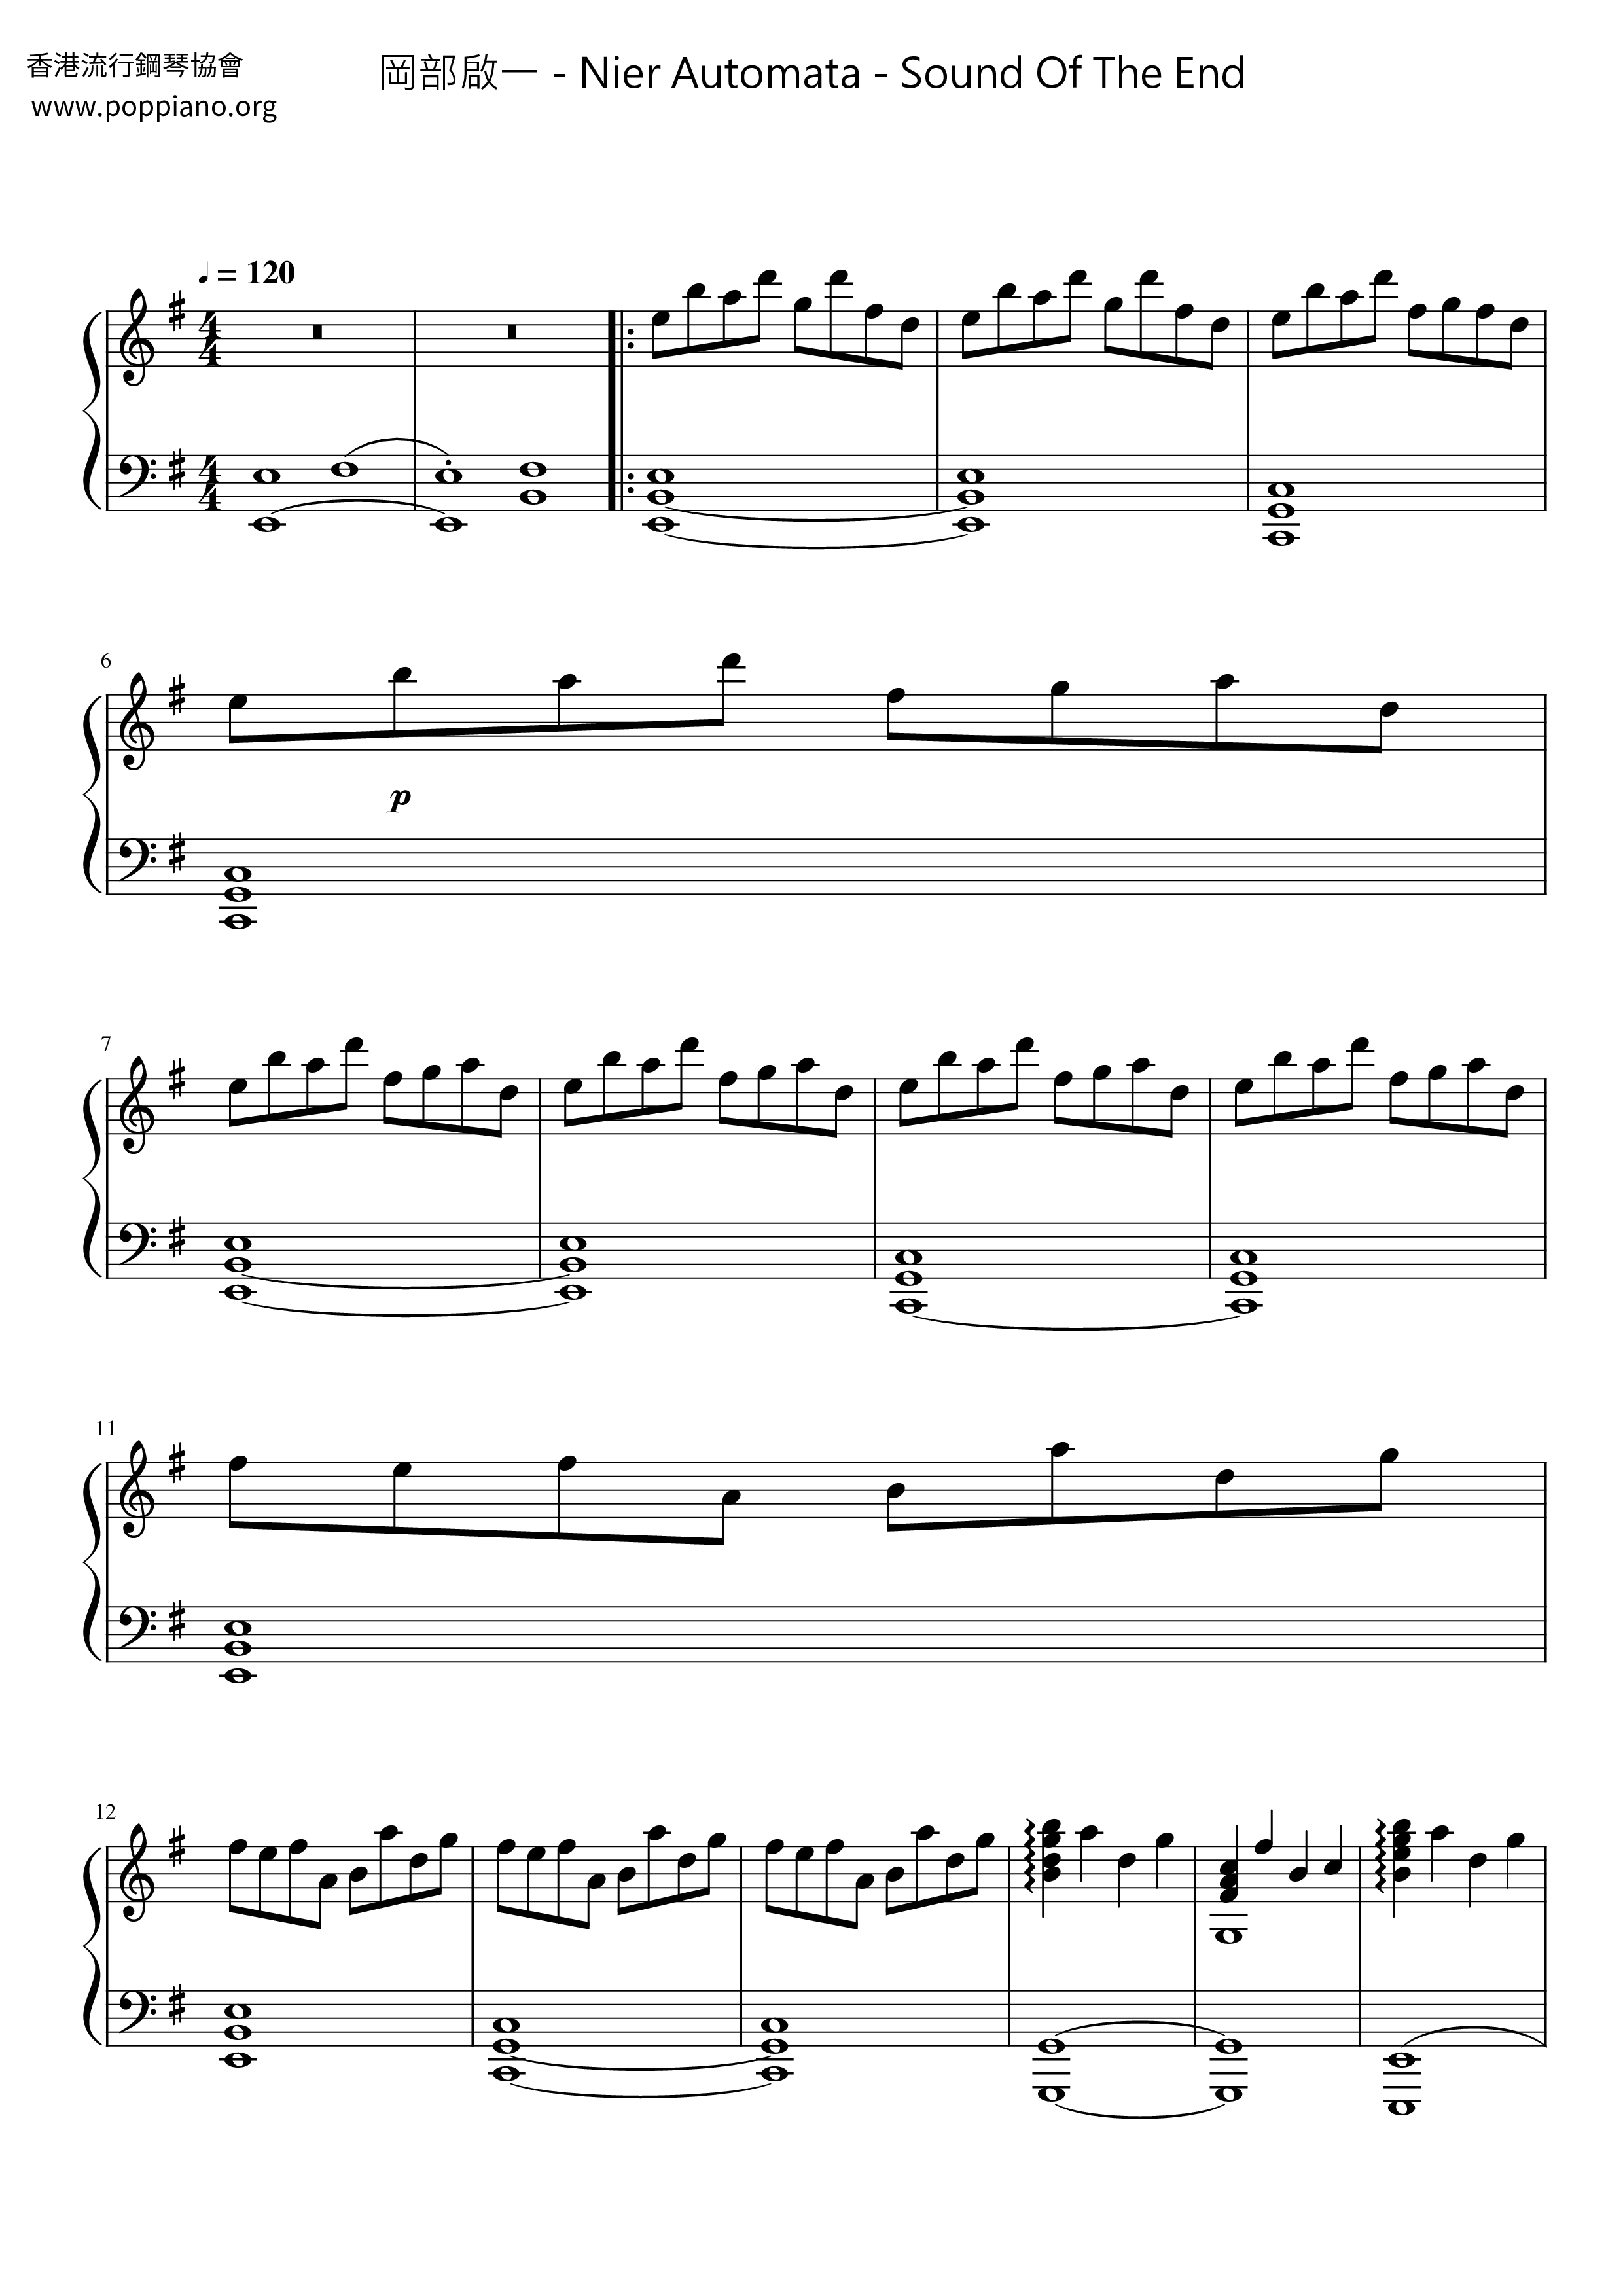 Nier Automata - Sound Of The End Score